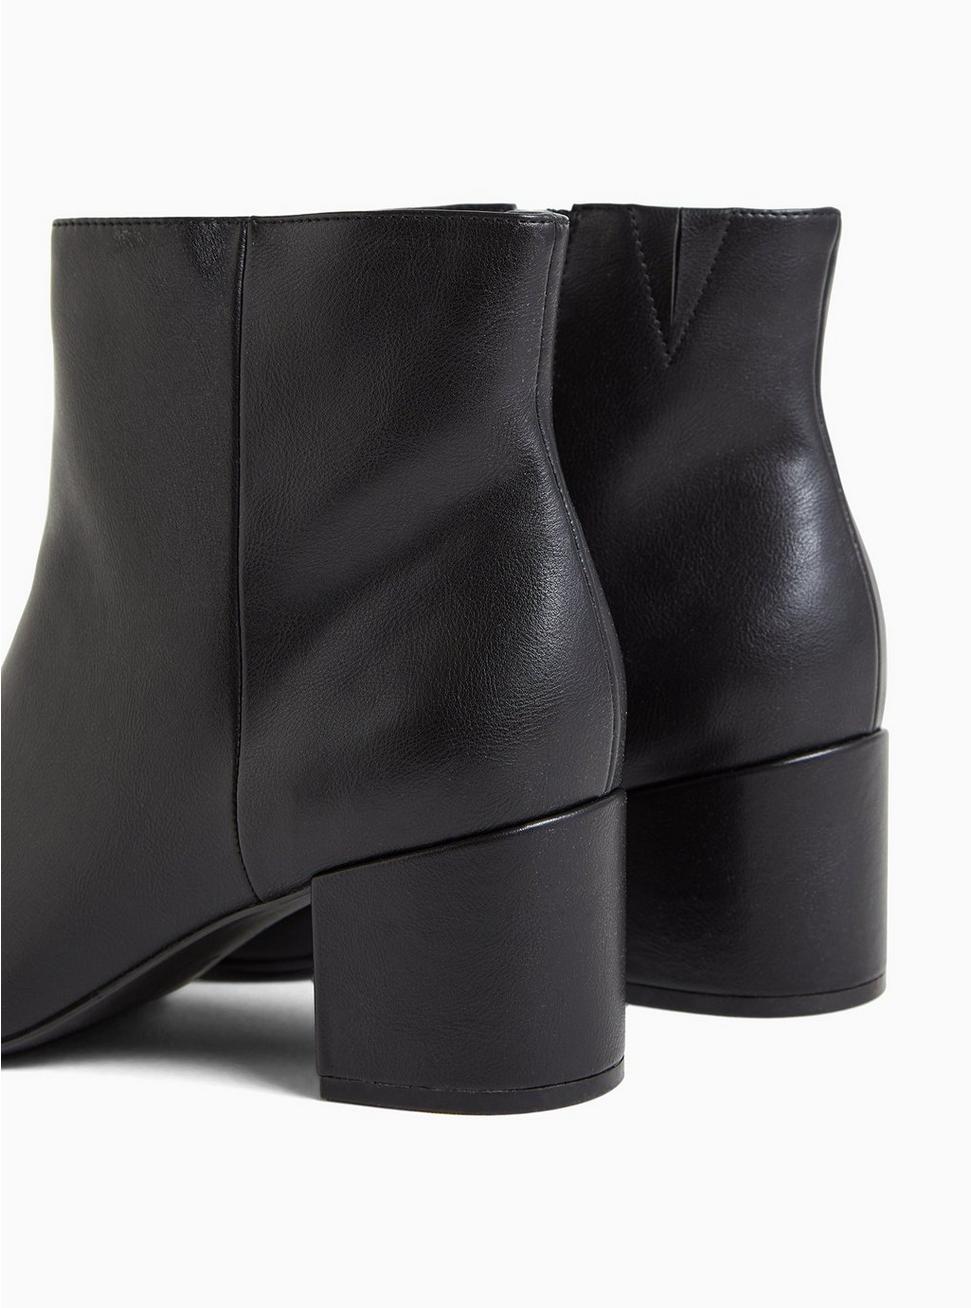 Plus Size - Black Faux Leather Ankle Bootie (WW) - Torrid